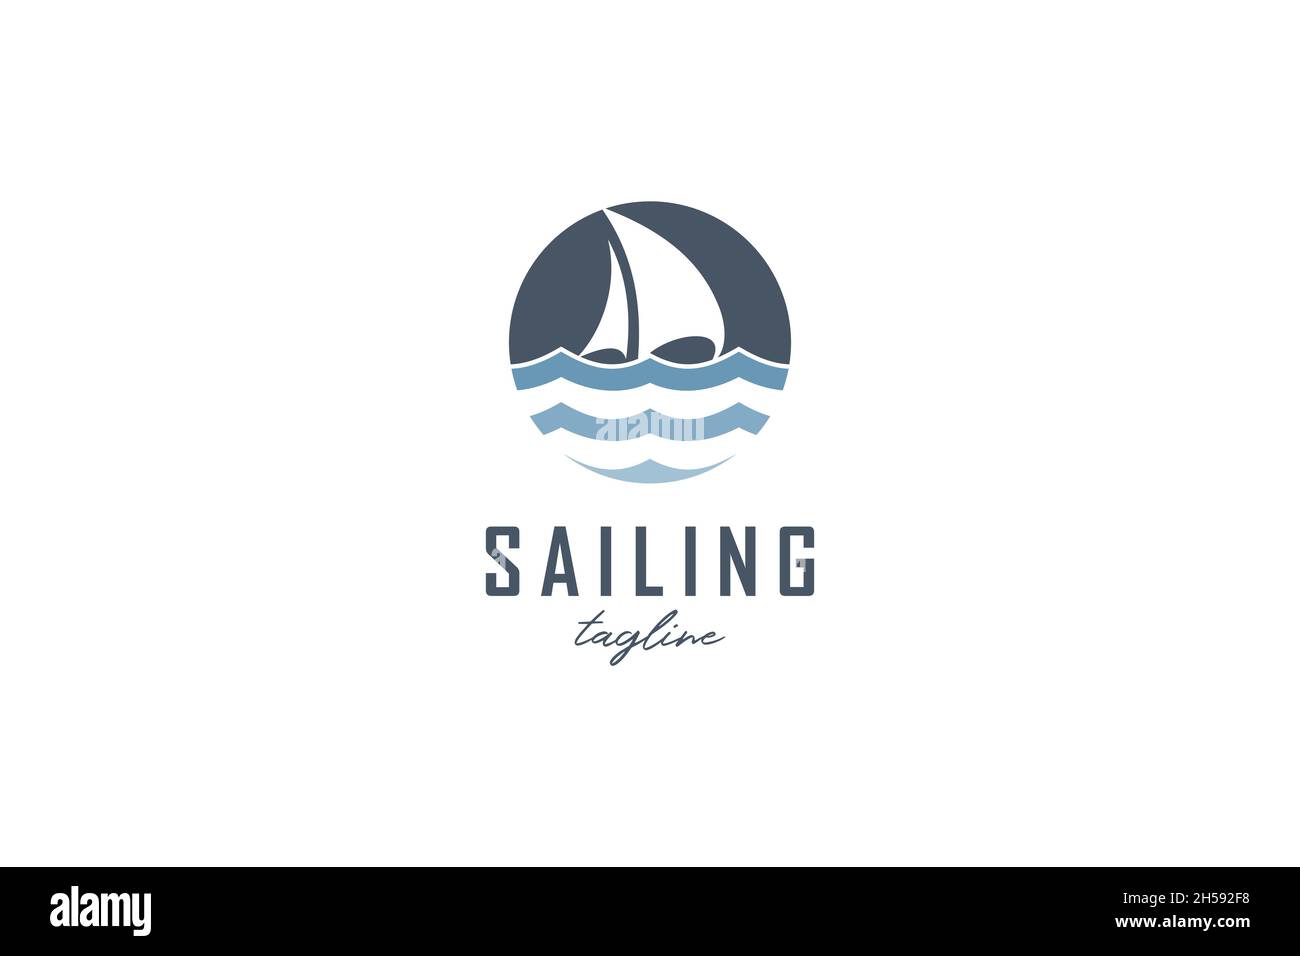 Simple Sailing Yacht Silhouette Logo design inspiration vector Stock Vector